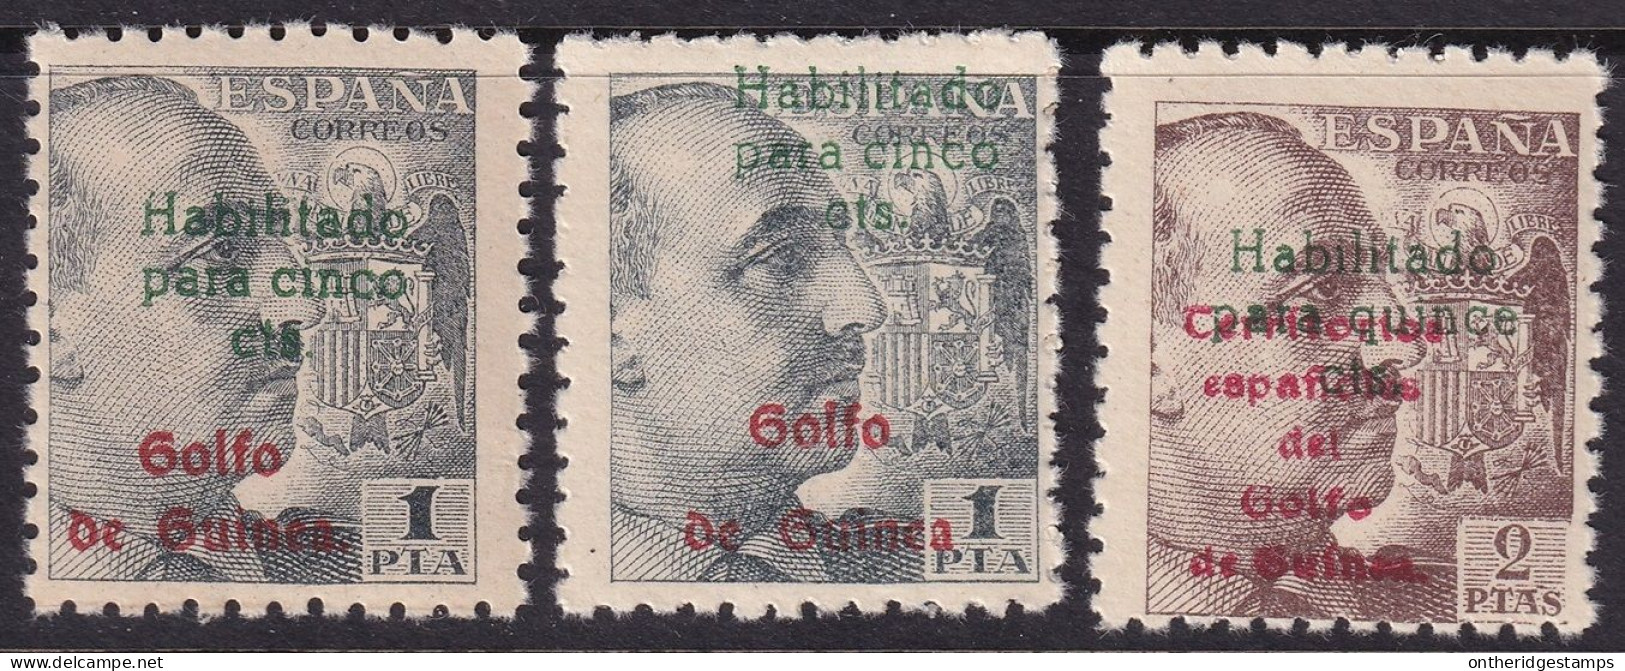 Spanish Guinea 1949 Sc 302-3 Ed 273-4 Set MNH** Both Overprint Spacings - Spanish Guinea